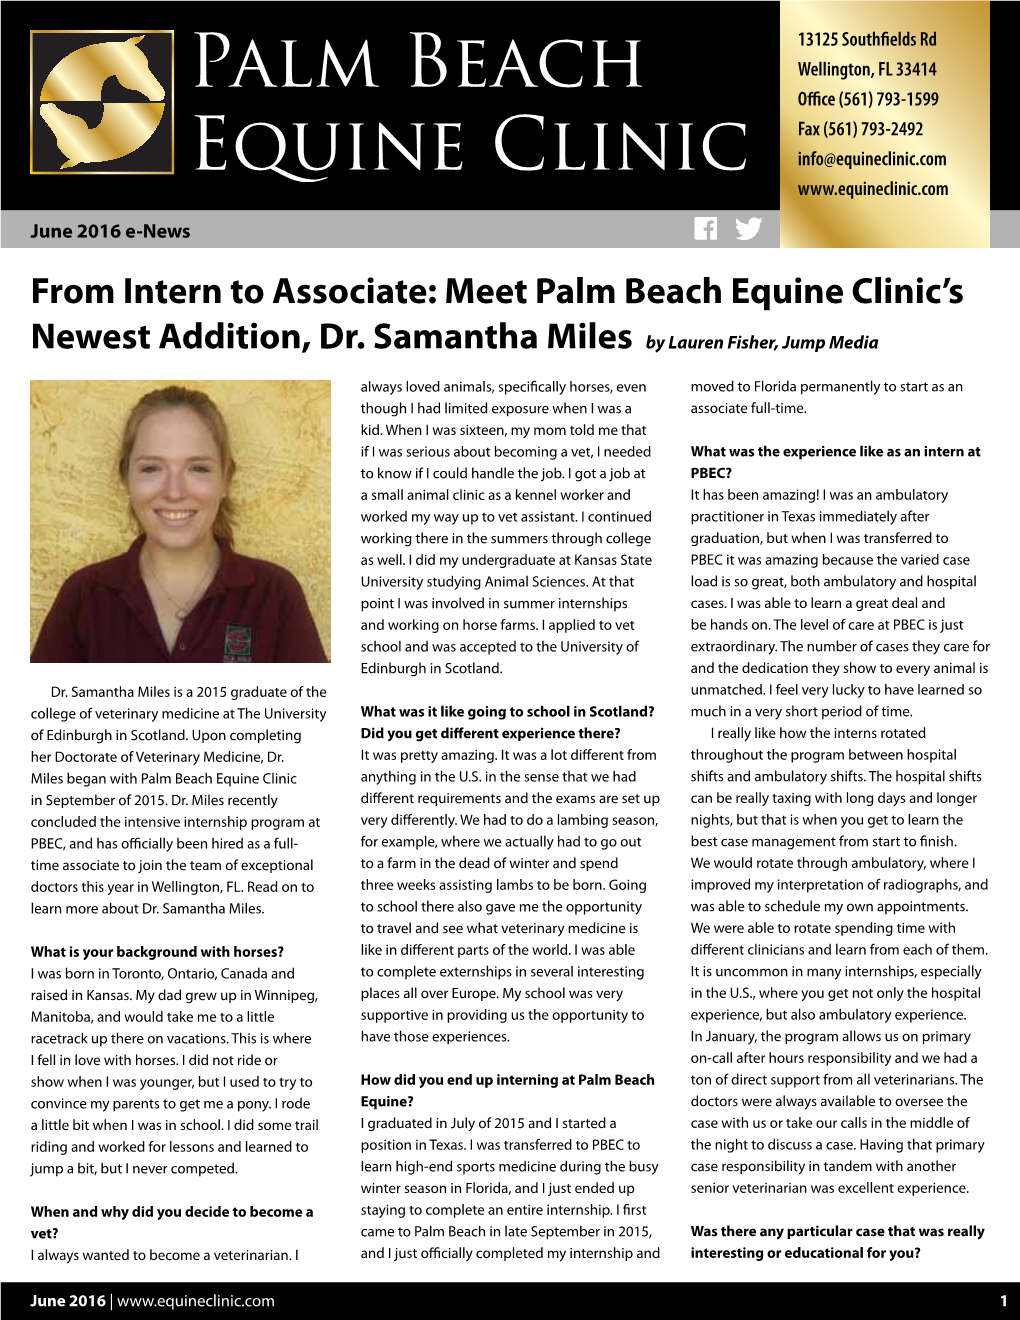 Meet Palm Beach Equine Clinic's Newest Addition, Dr. Samantha